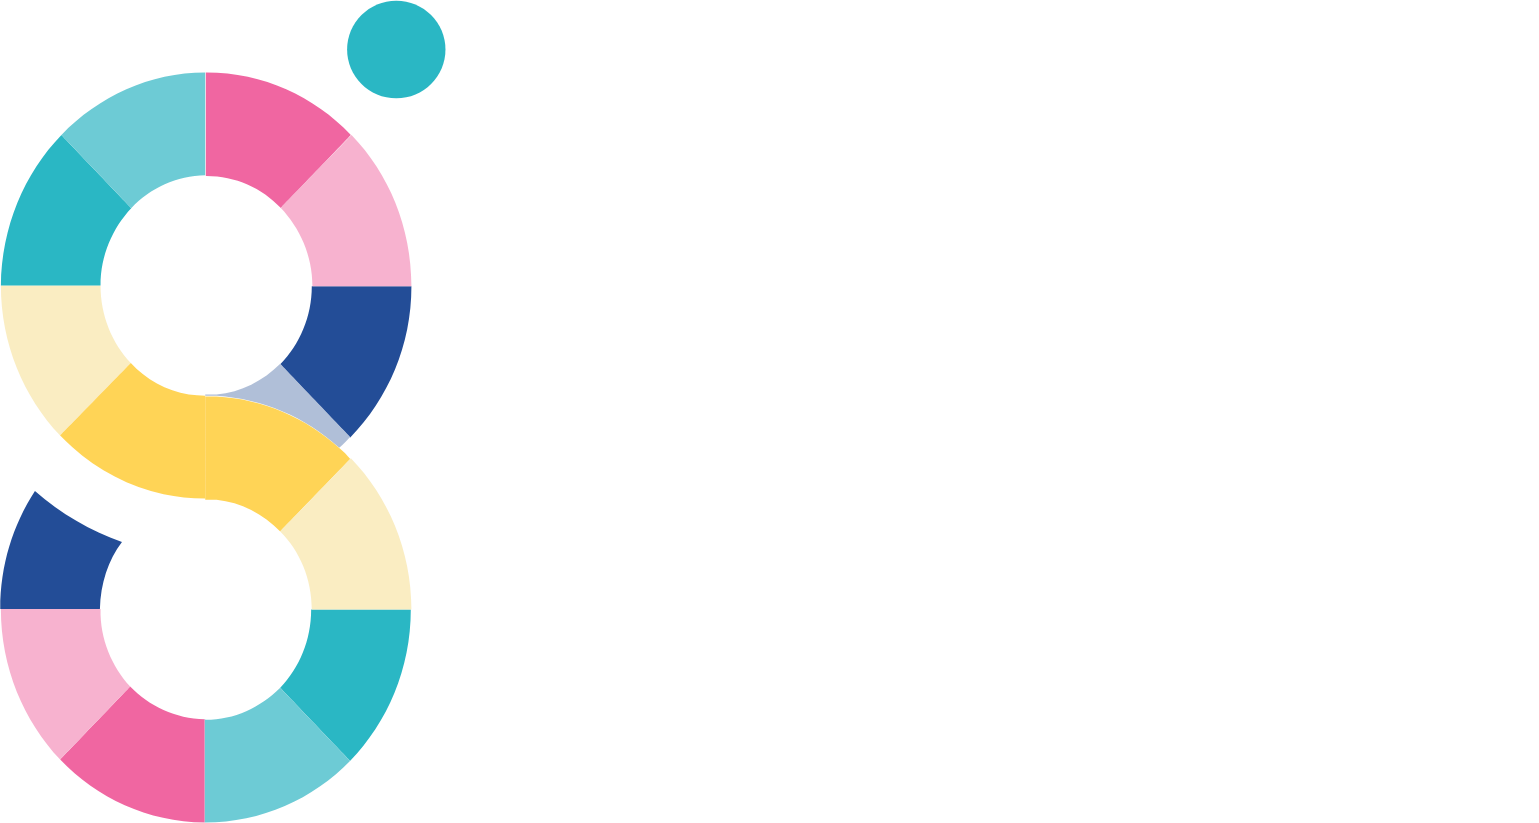 Genetic Technologies logo large for dark backgrounds (transparent PNG)